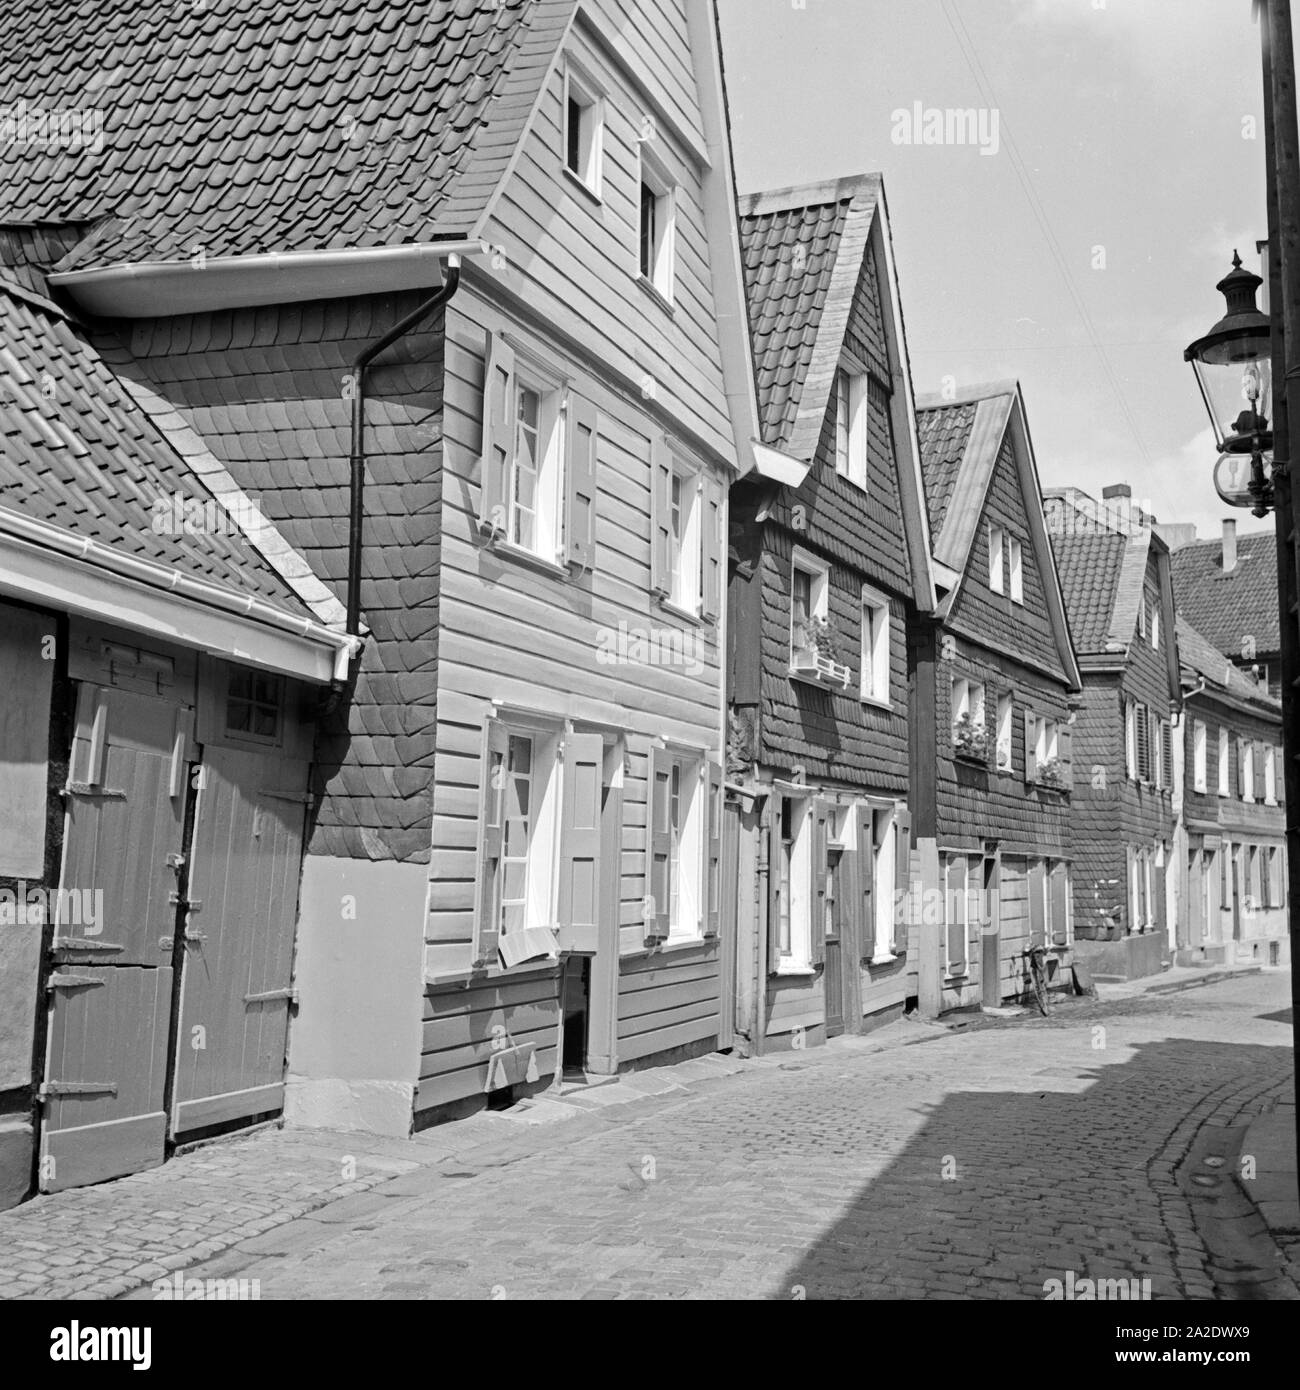 Malerische Häuserzeile in der Altstadt von Solingen, Deutschland 1930er Jahre. Scenic fila di case presso la vecchia città di Solingen, Germania 1930s. Foto Stock